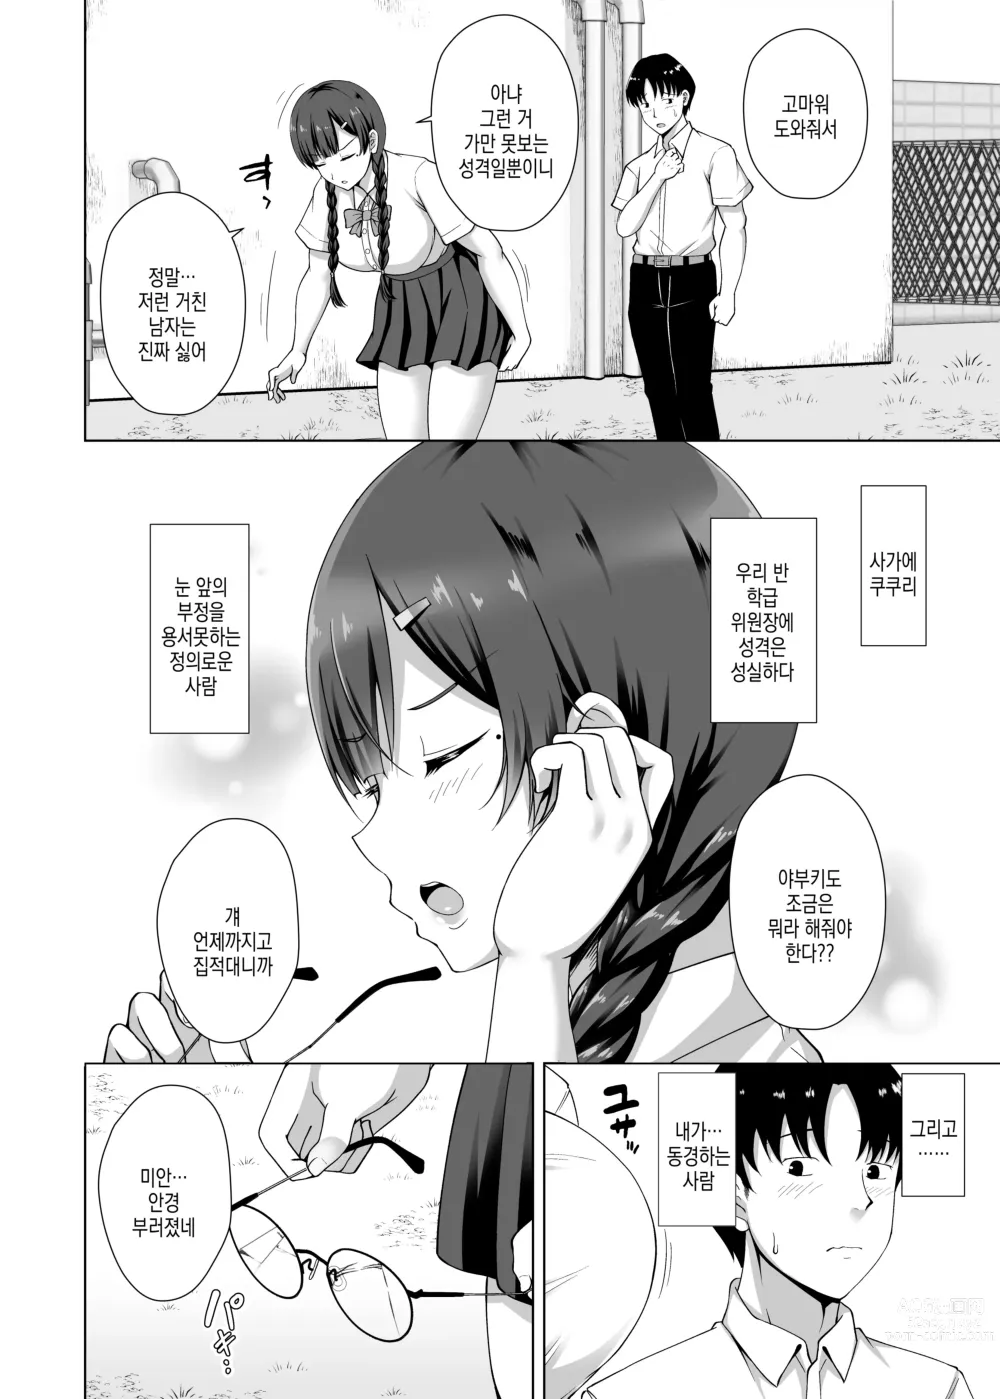 Page 9 of doujinshi 그녀가 안경을 벗은 이유 ~ 짝사랑하는 거유 위원장이 날라리 남친한테 물들 때까지 ~